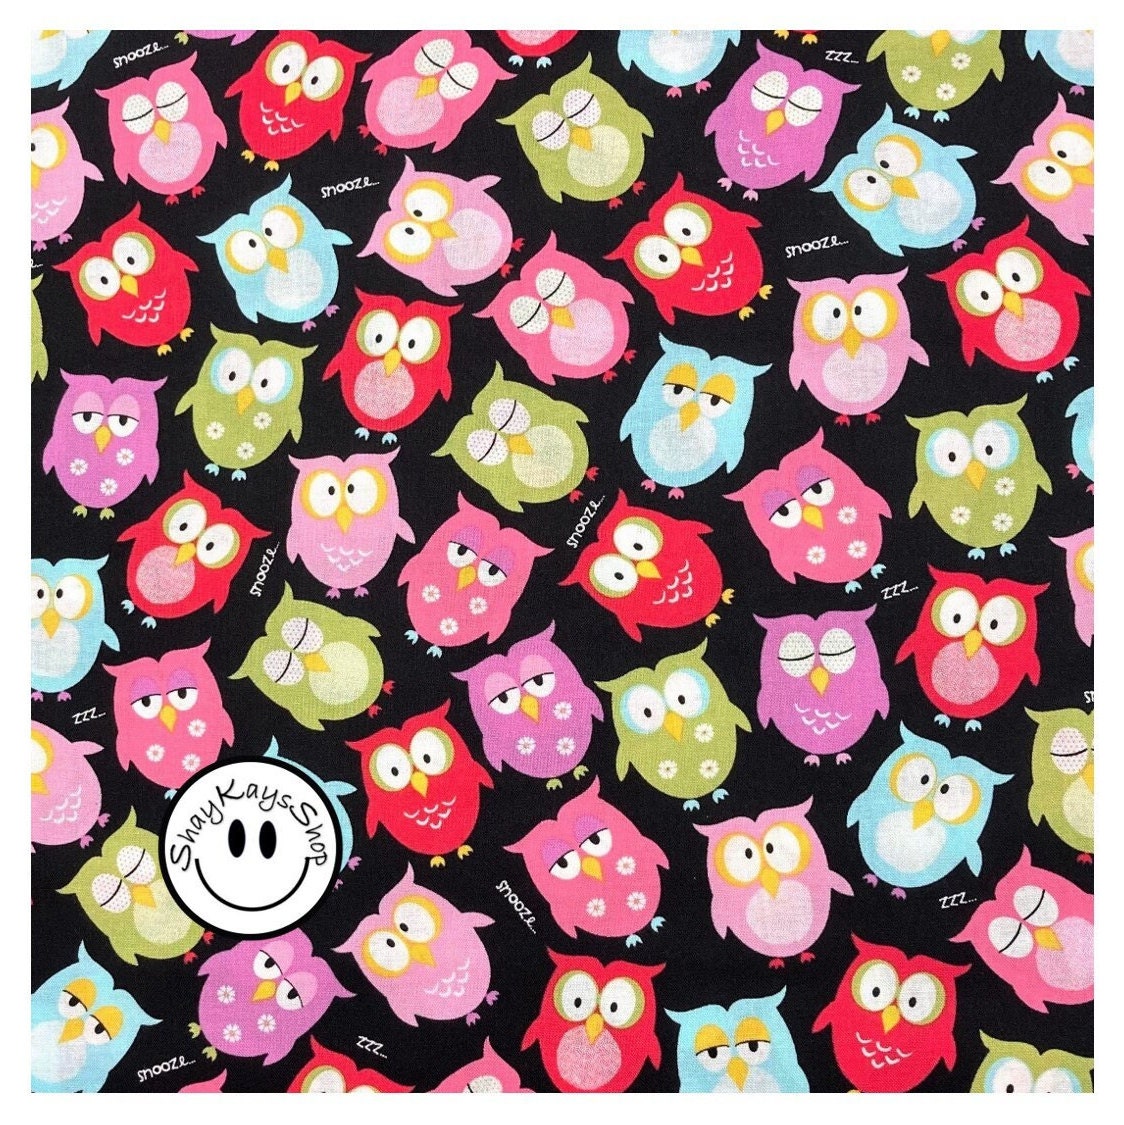 Precut 1/4 Quarter Yard Hoot Owls Fabric, Fun Colorful Novelty Animal Print 100% Cotton Fabric, Sewi